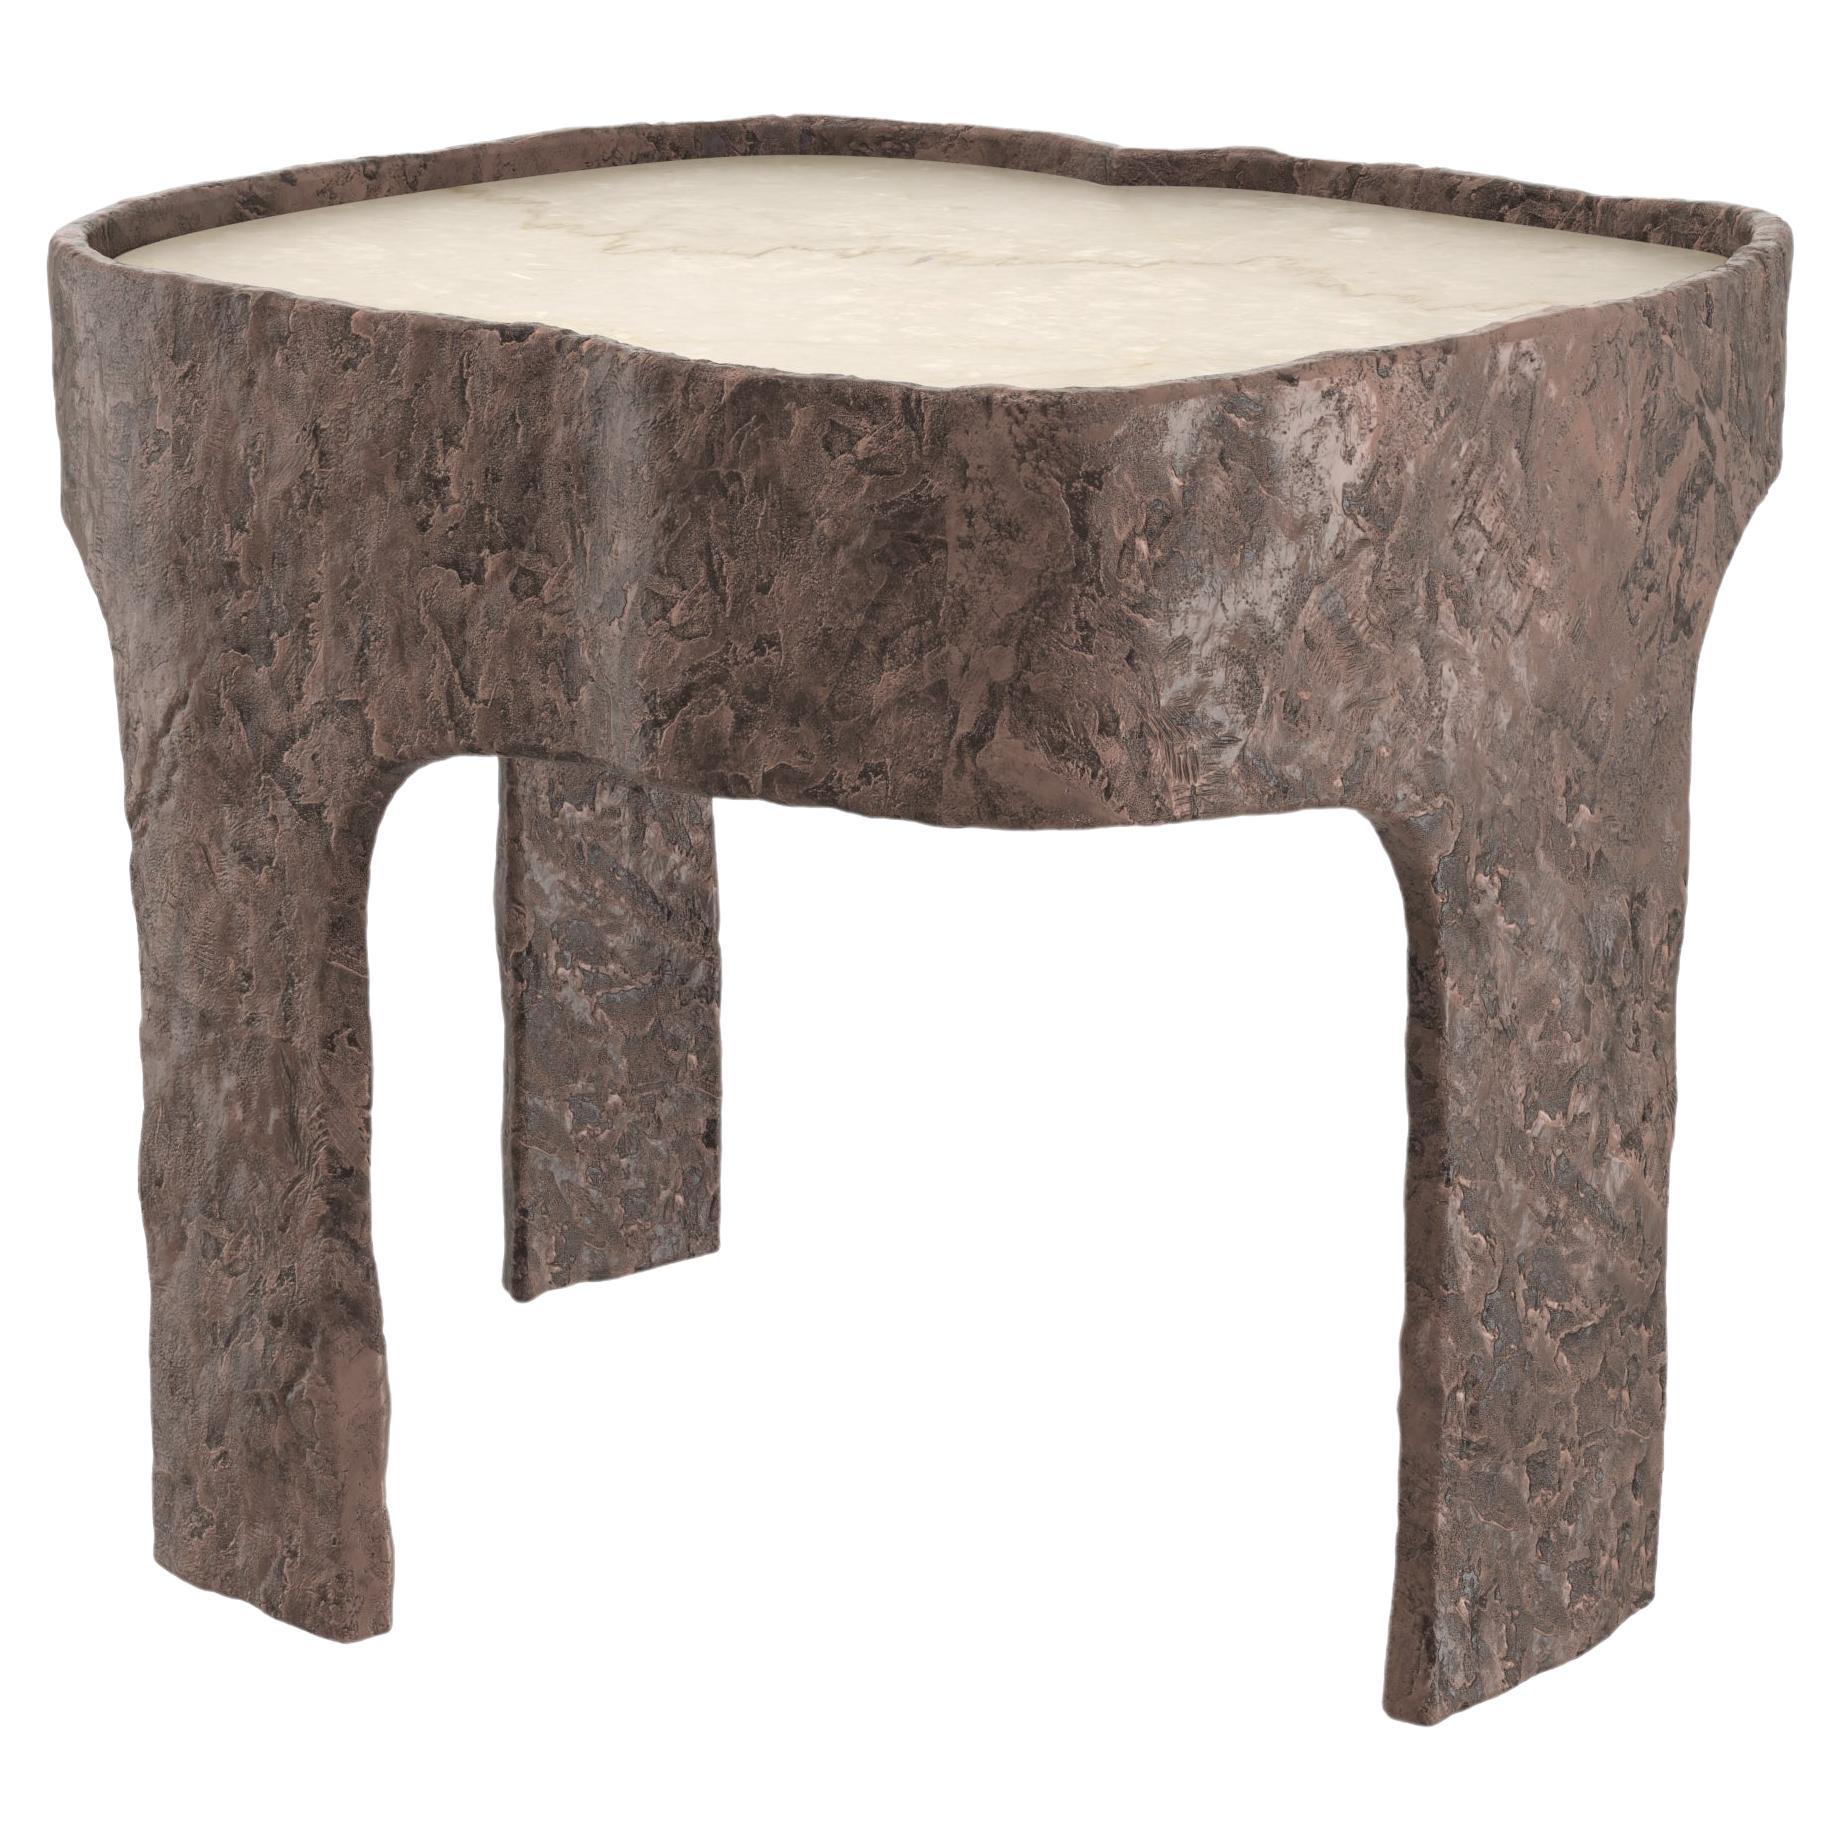 Limited Edition Marble Bronze Table, Sumatra V1 by Edizione Limitata